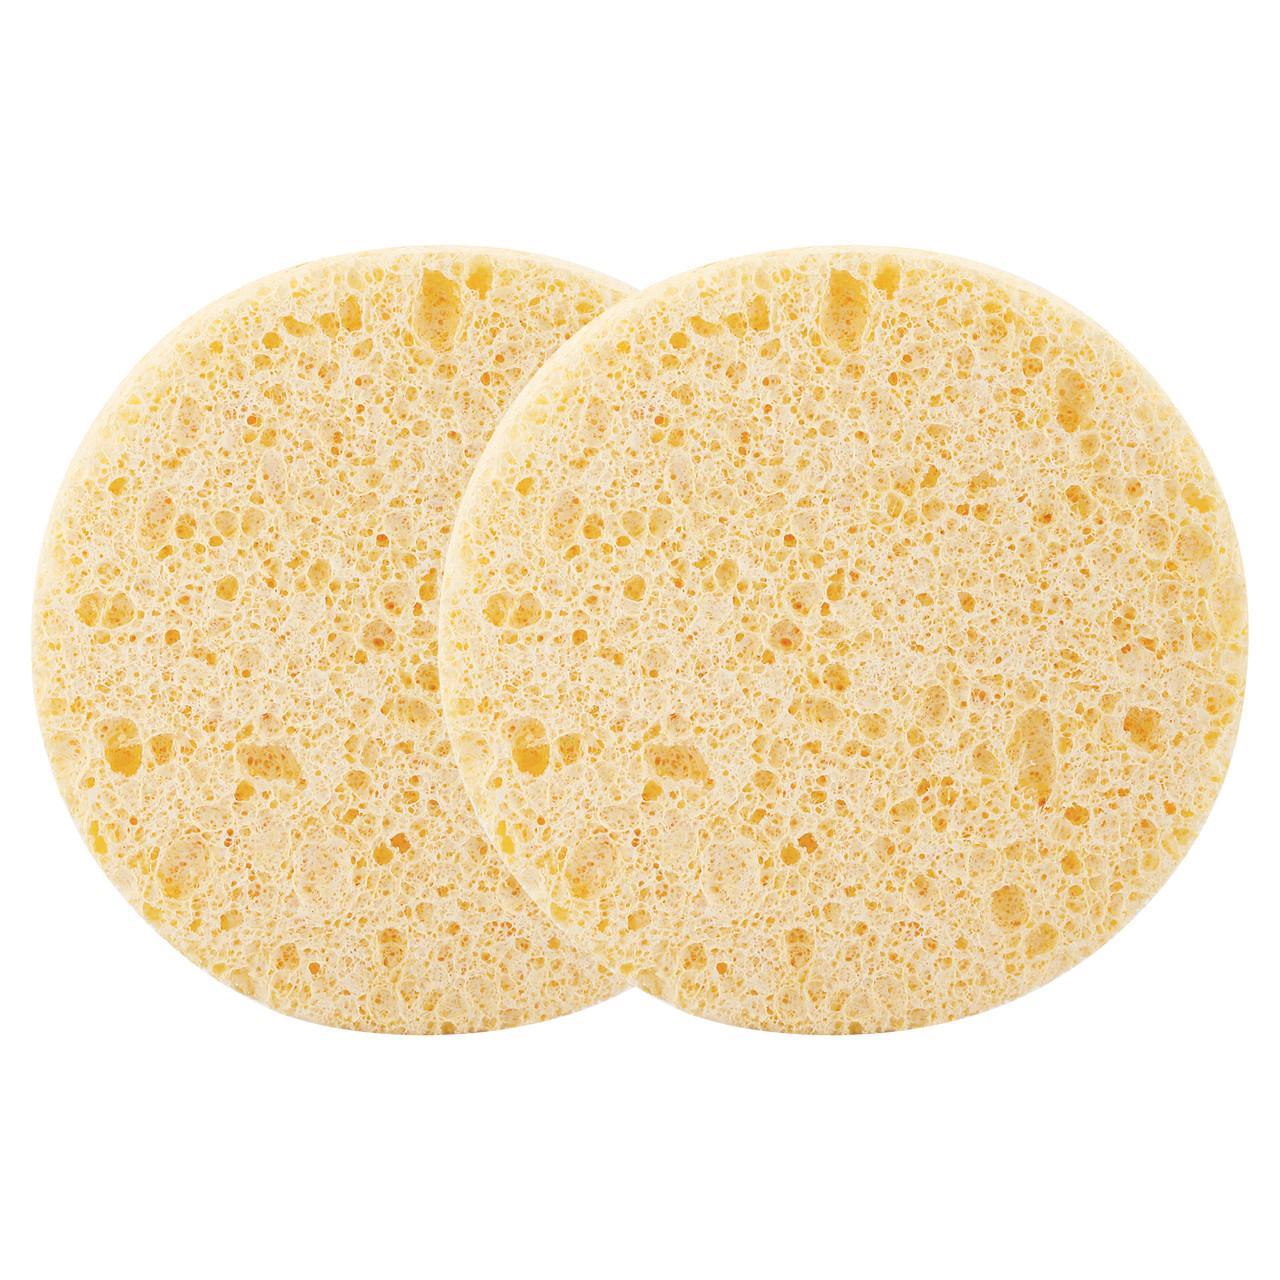 Manicare Cellulose Sponge, 2 Pack